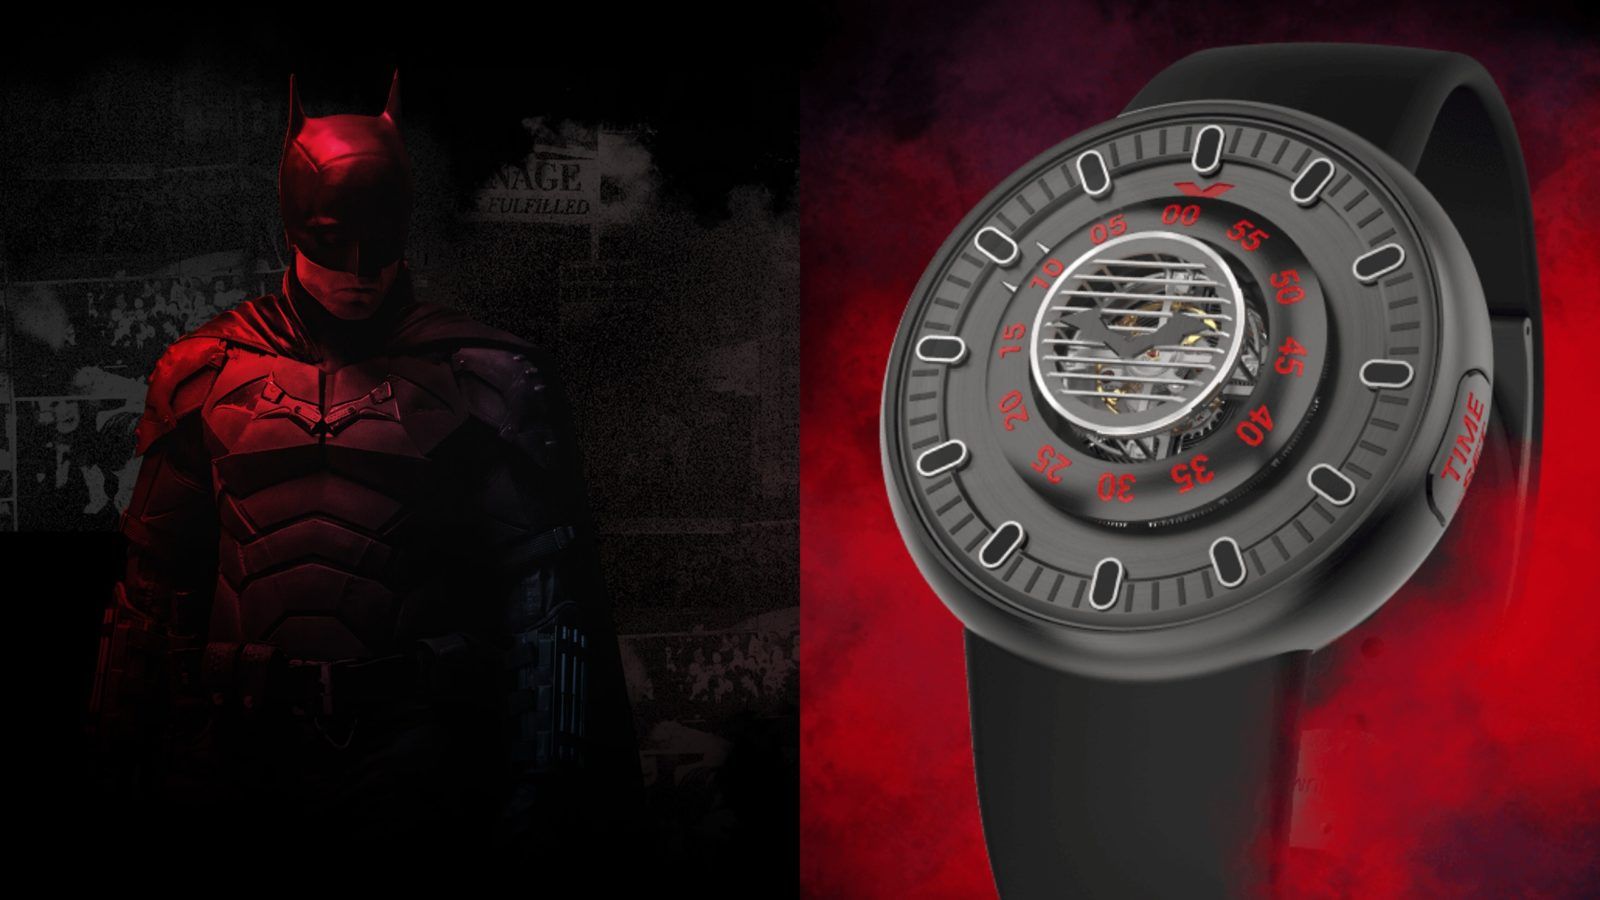 Kross Studio’s ‘The Batman’ tourbillon watch pays homage to the dark knight